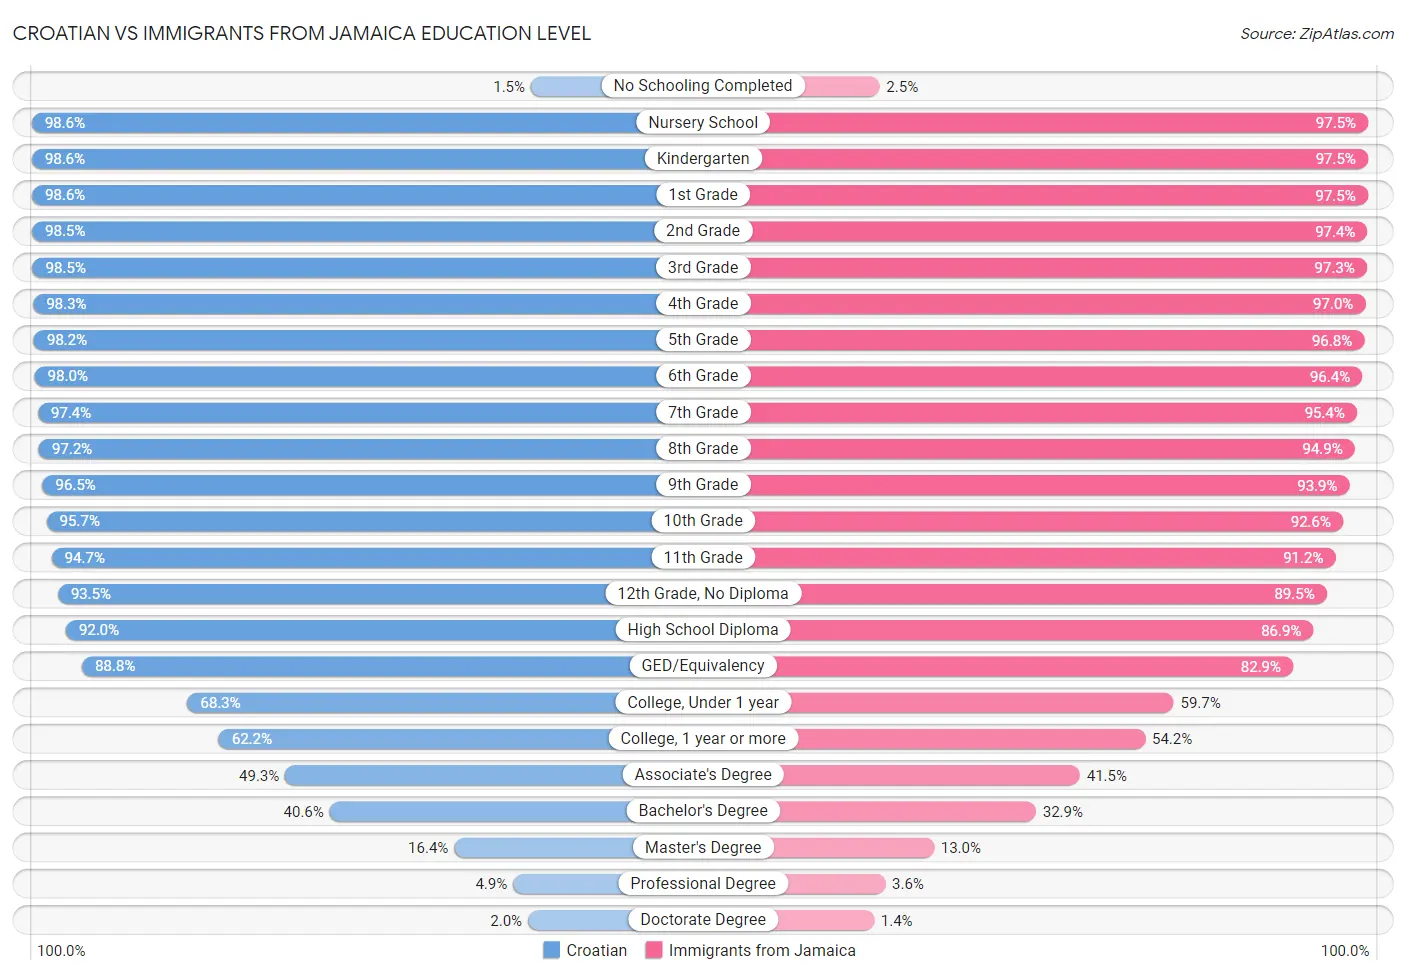 Croatian vs Immigrants from Jamaica Education Level